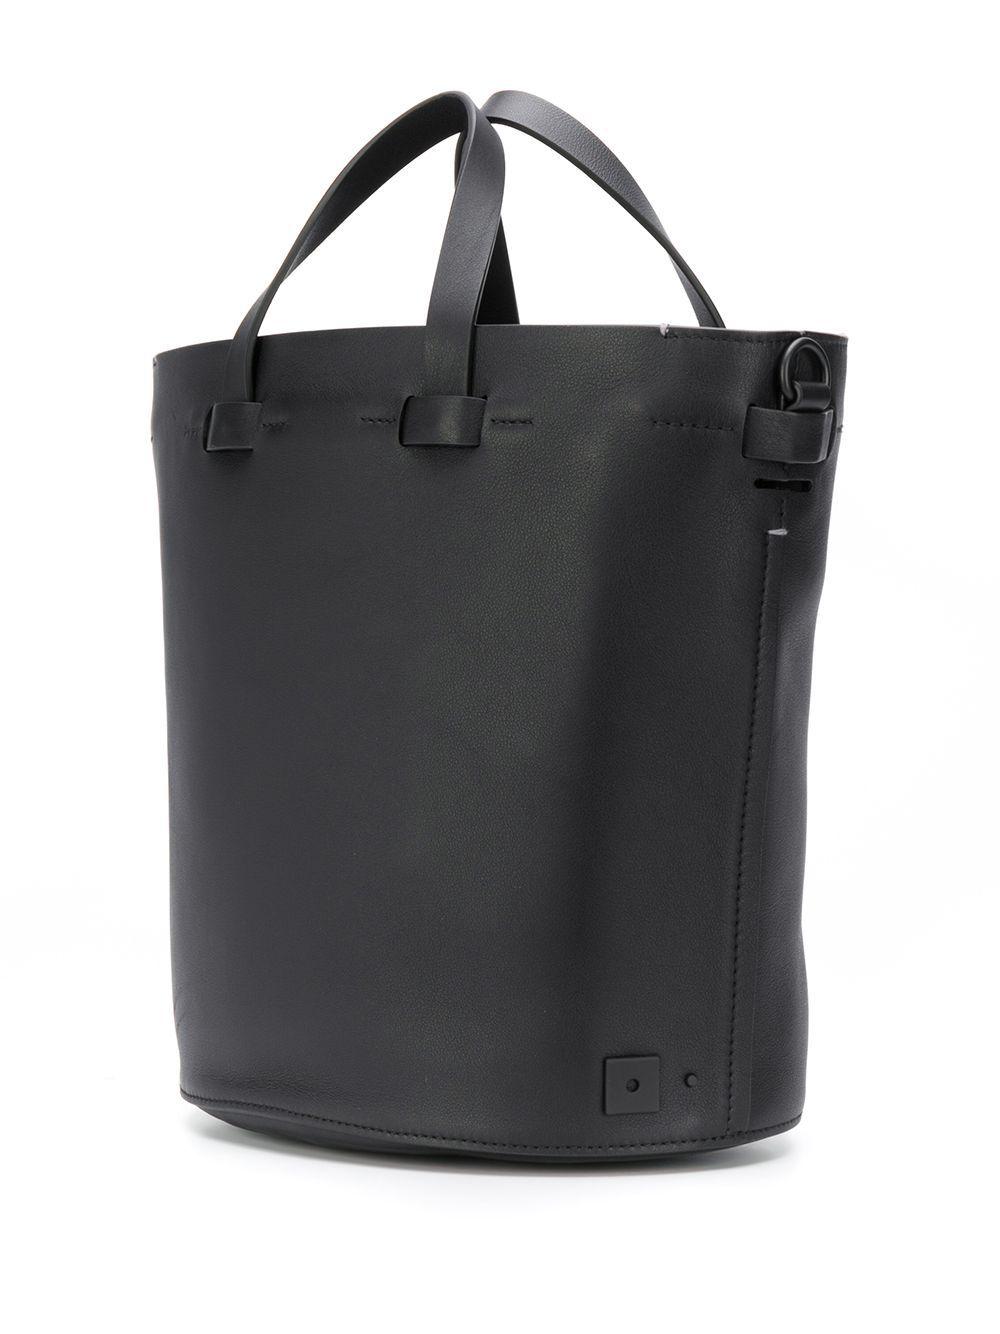 Troubadour Leather Contour Oval Bag in Black Lyst